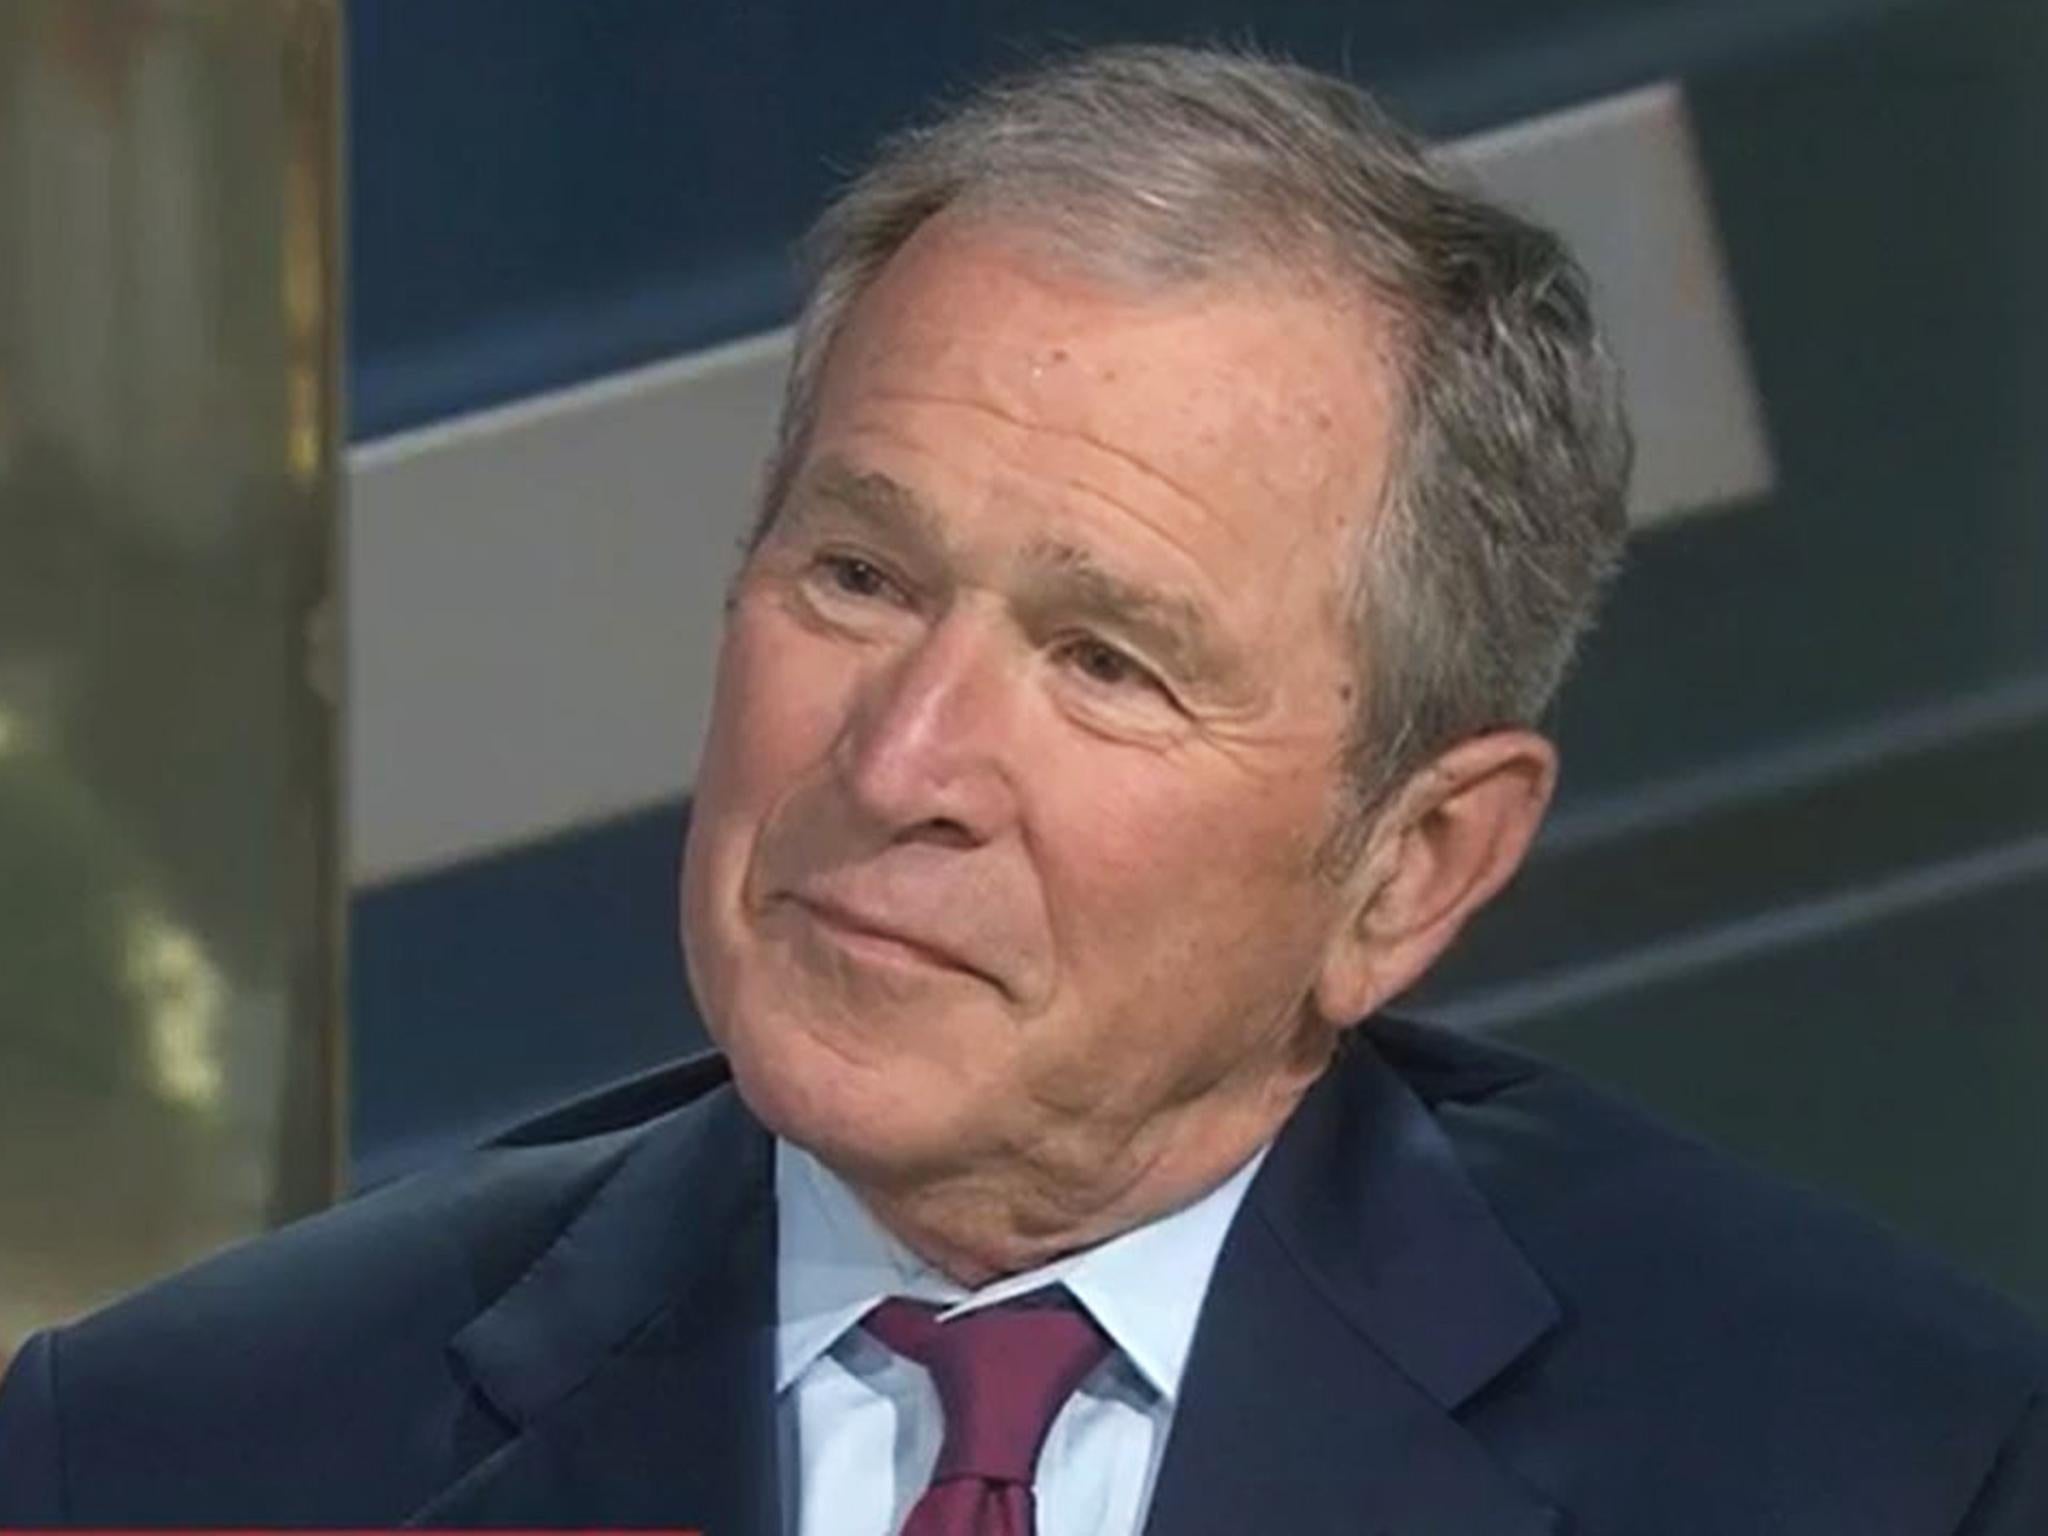 George Bush Likes To Joke Donald Trump Makes Me Look Pretty Good